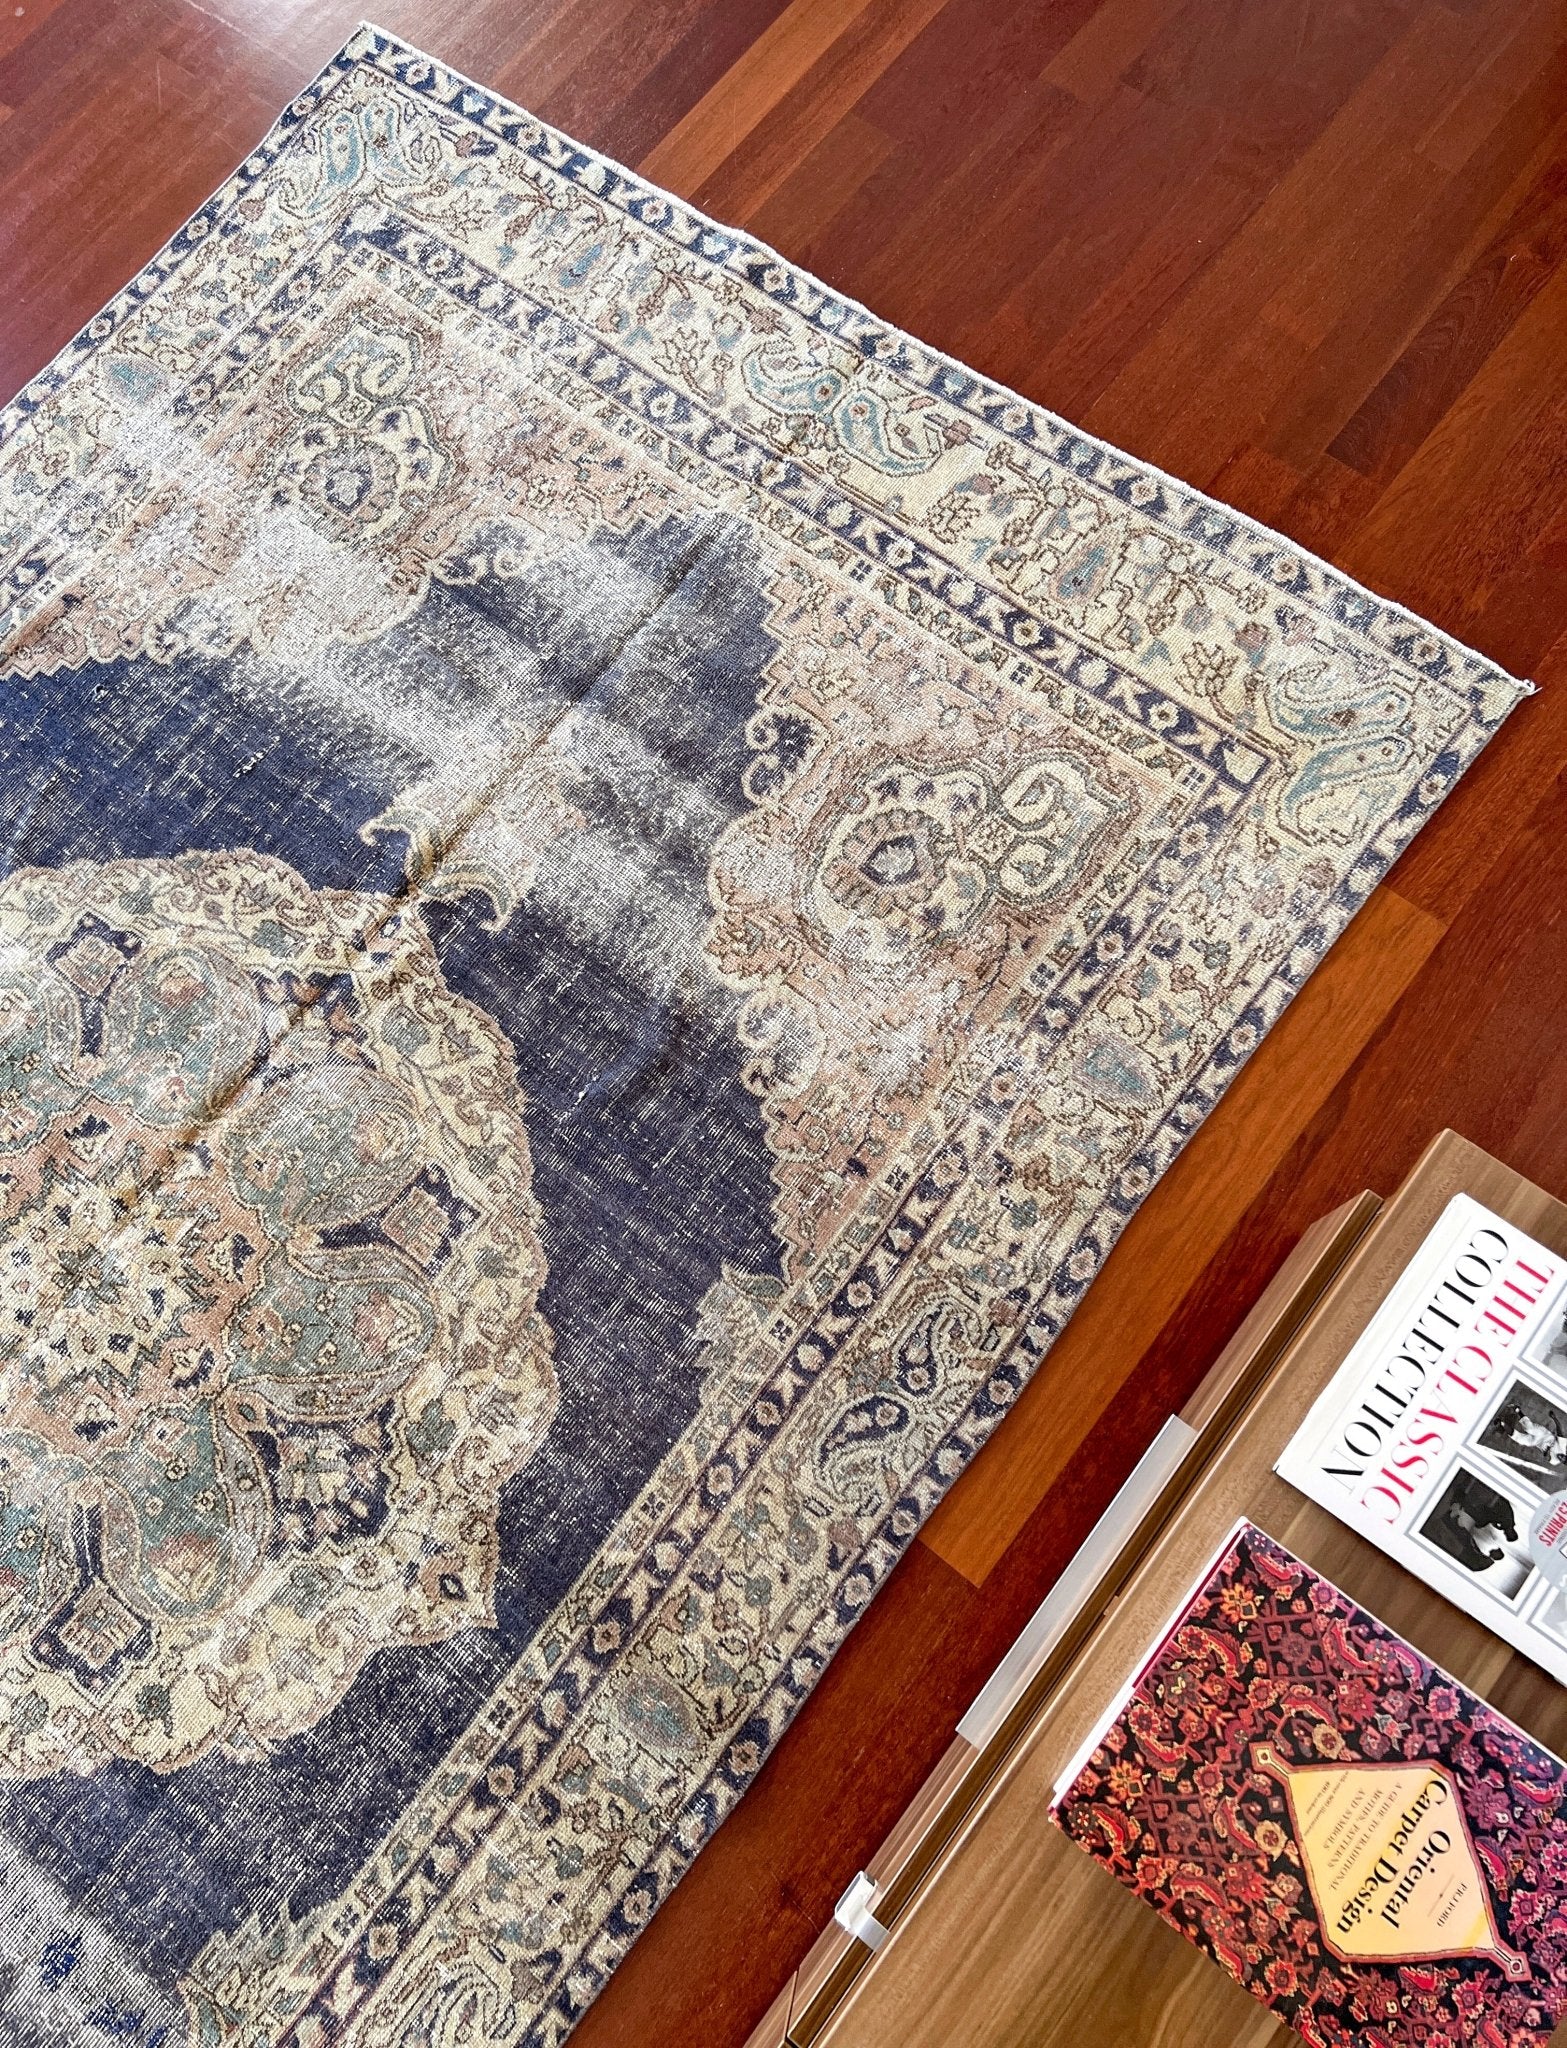 Muted vintage anatolian rug san francisco bay area rug shop. distressed overdyed turkish rug shop toronto canada